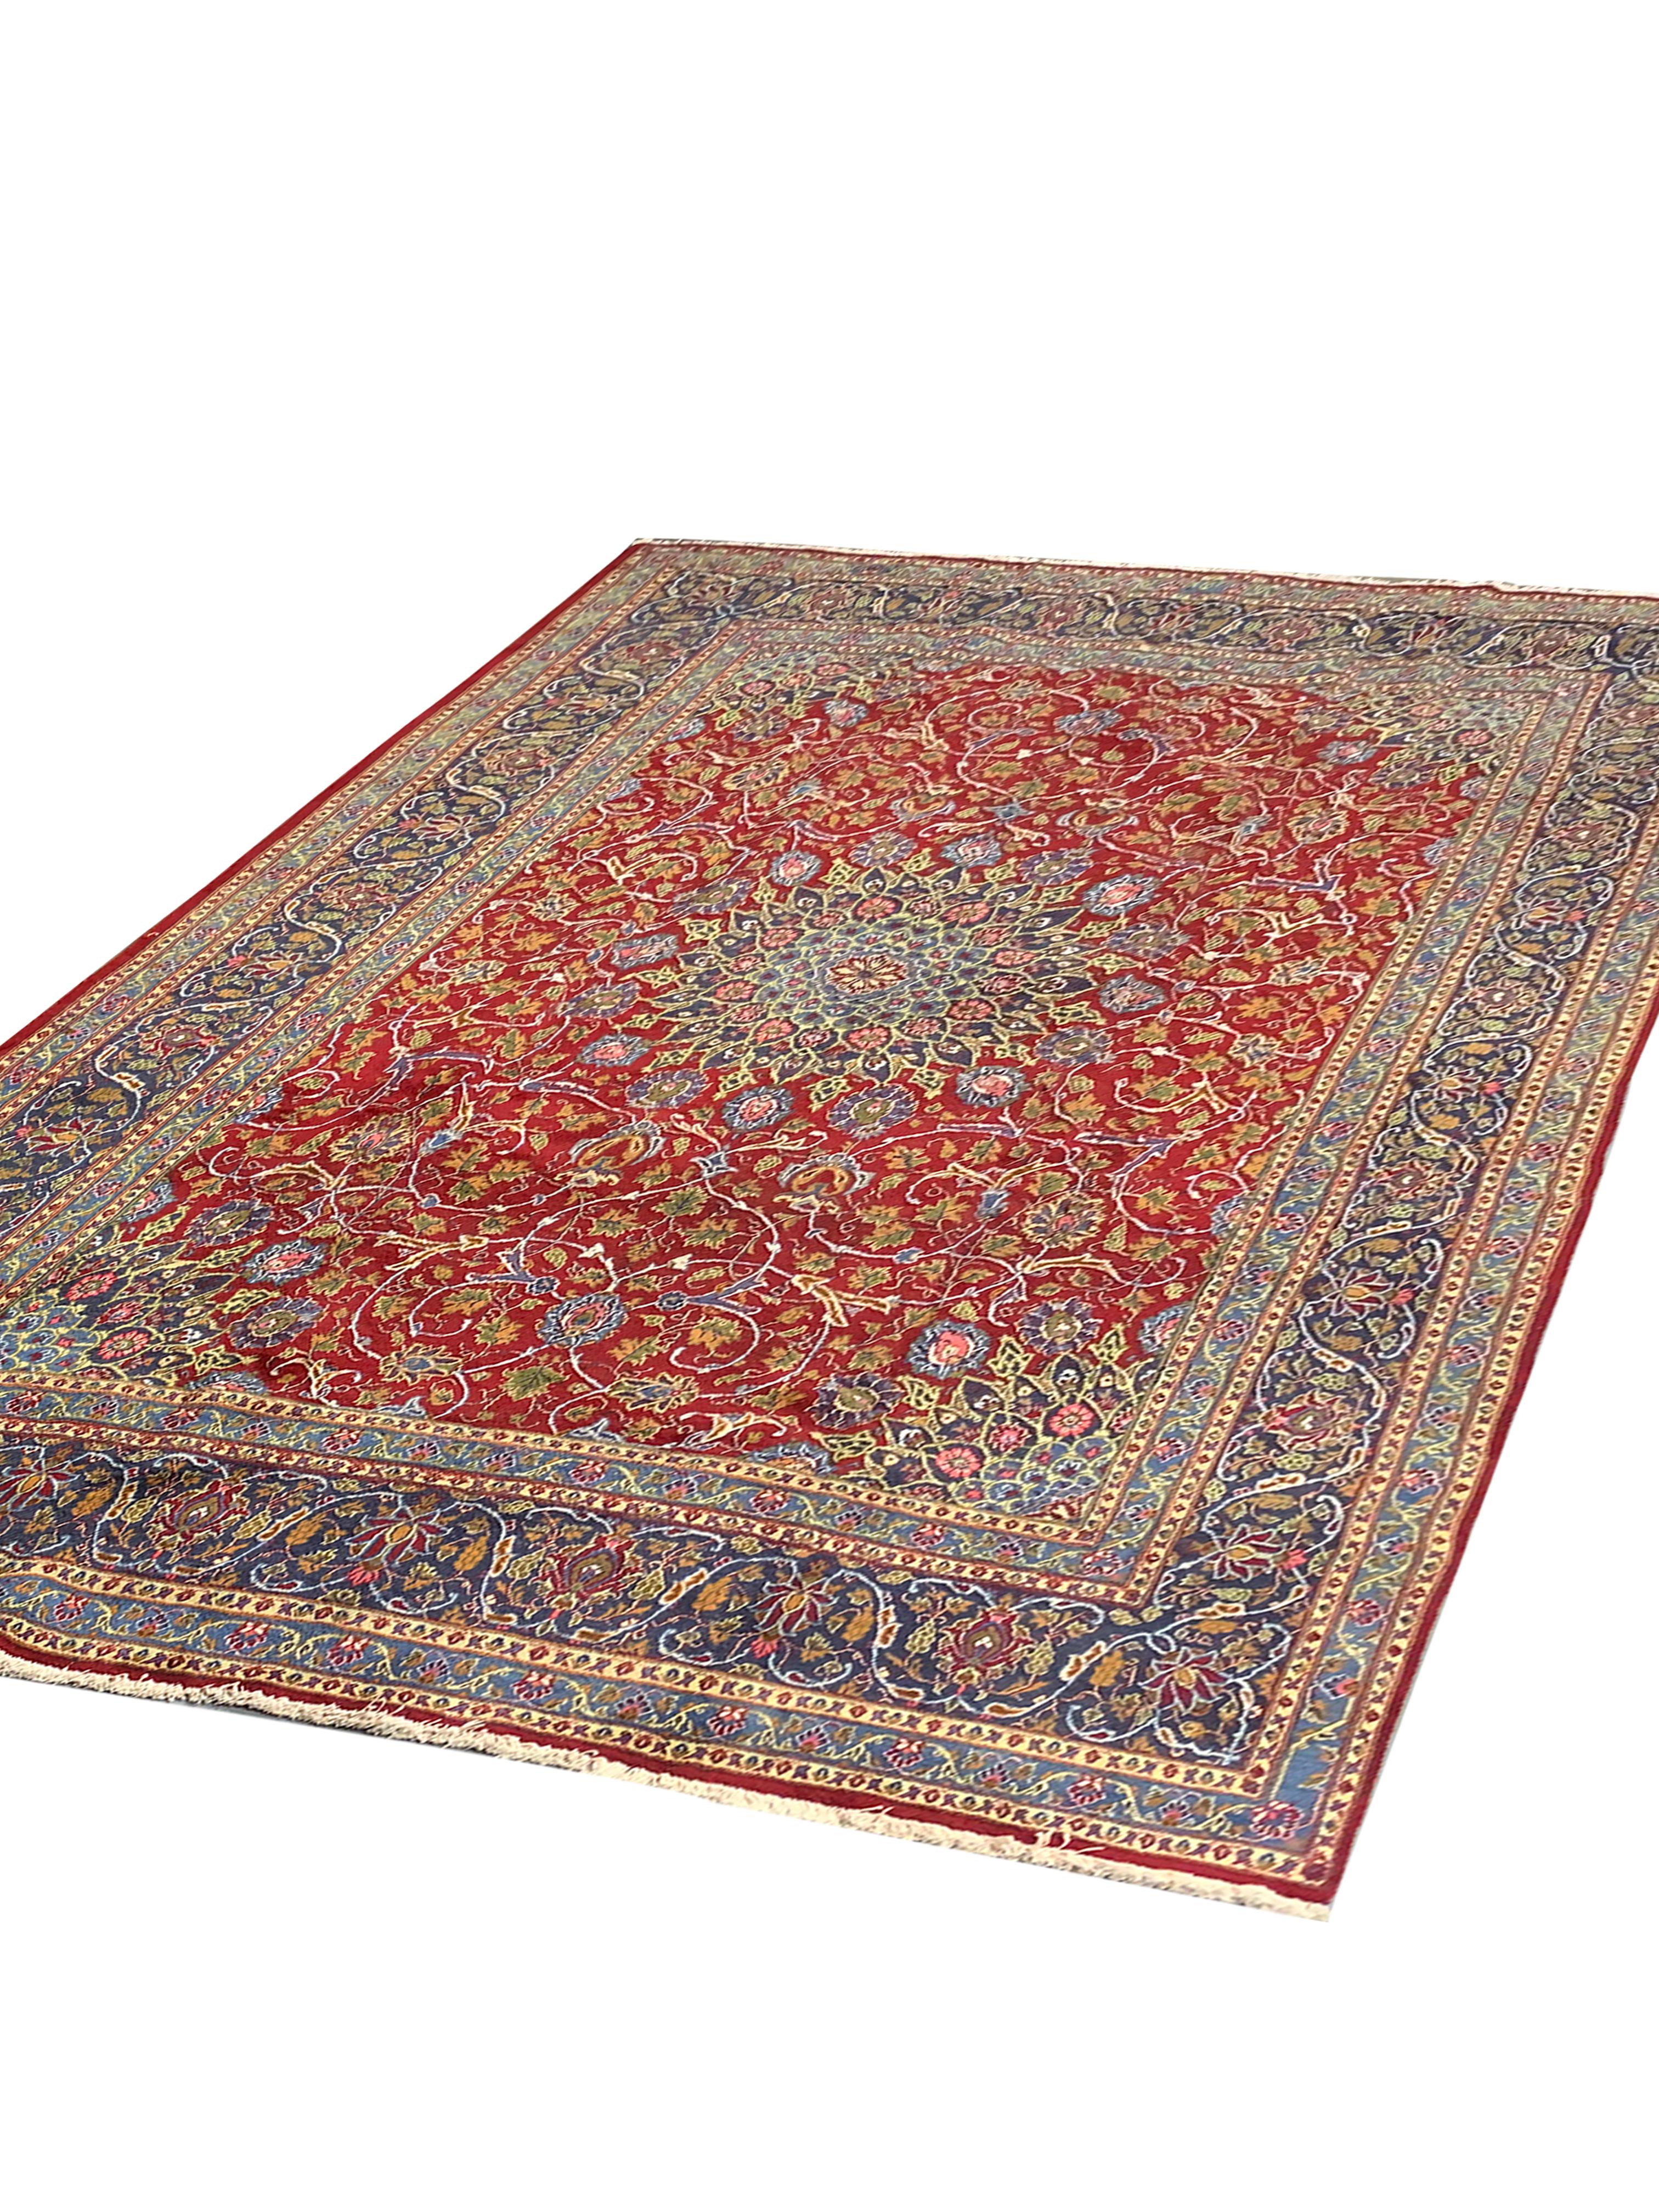 Azerbaijani Traditional Handmade Vintage Red Wool Area Rug Large Oriental Carpet For Sale